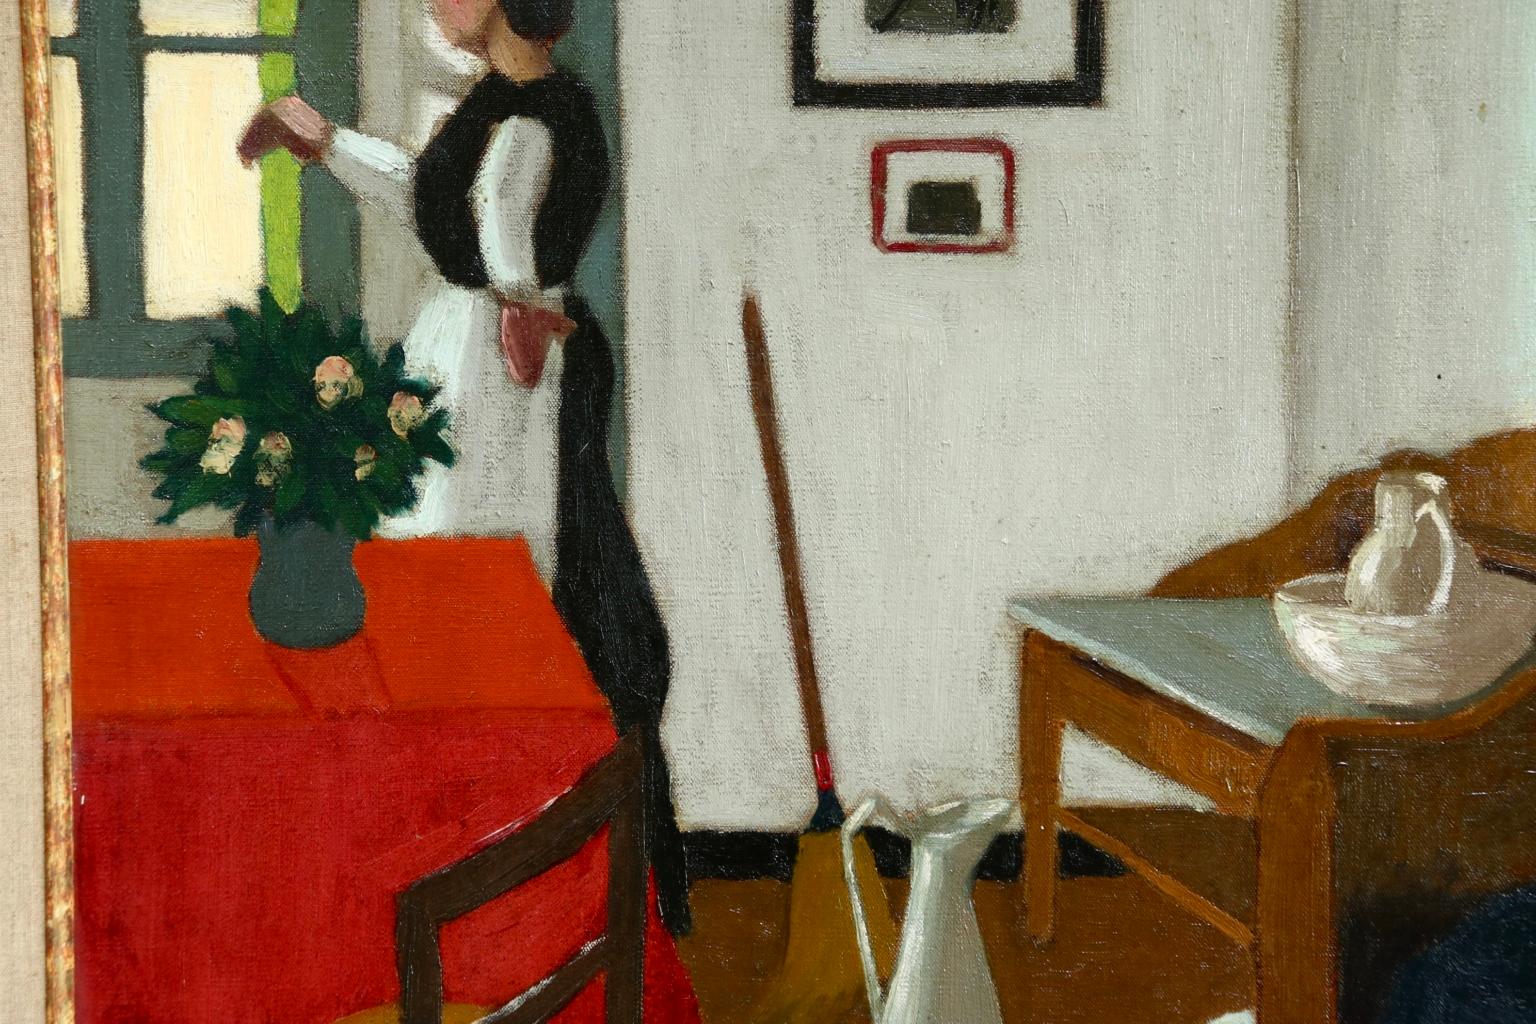 Bonne a la fenetre - Post Impressionist Oil, Figure in Interior by M Borgeaud - Post-Impressionist Painting by Marius Borgeaud